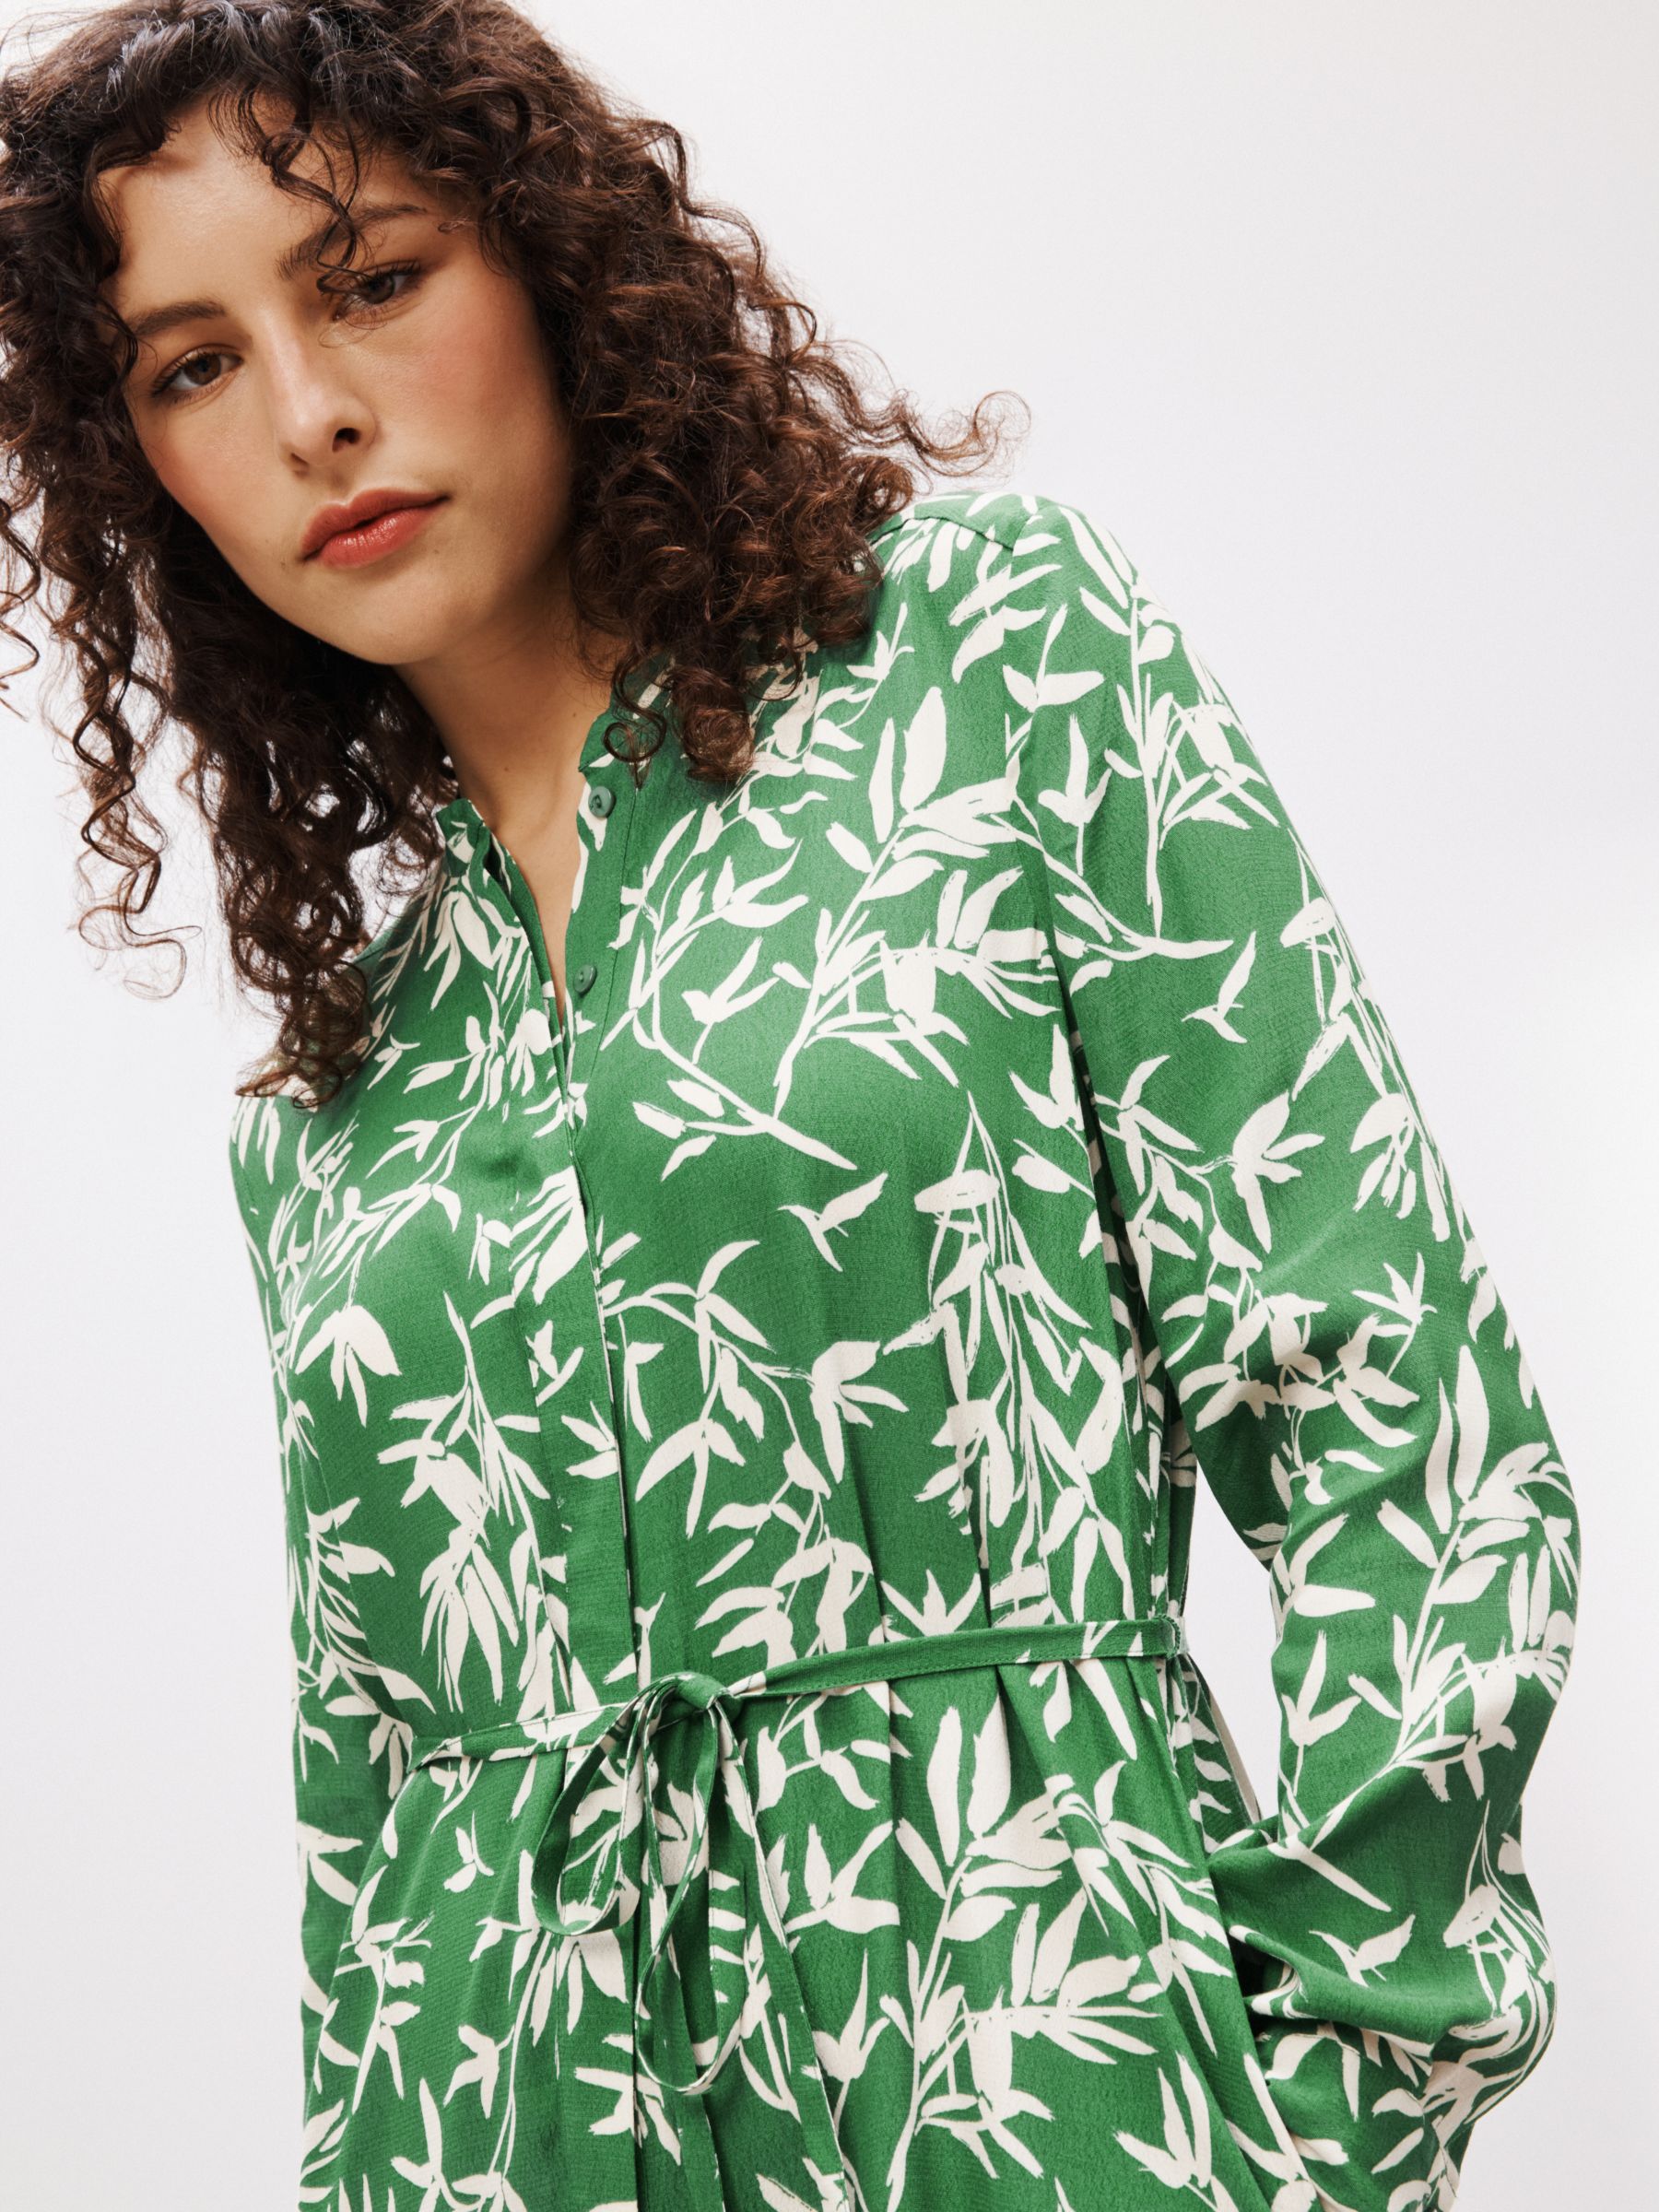 John Lewis Bamboo Print Midi Dress, Green/Multi